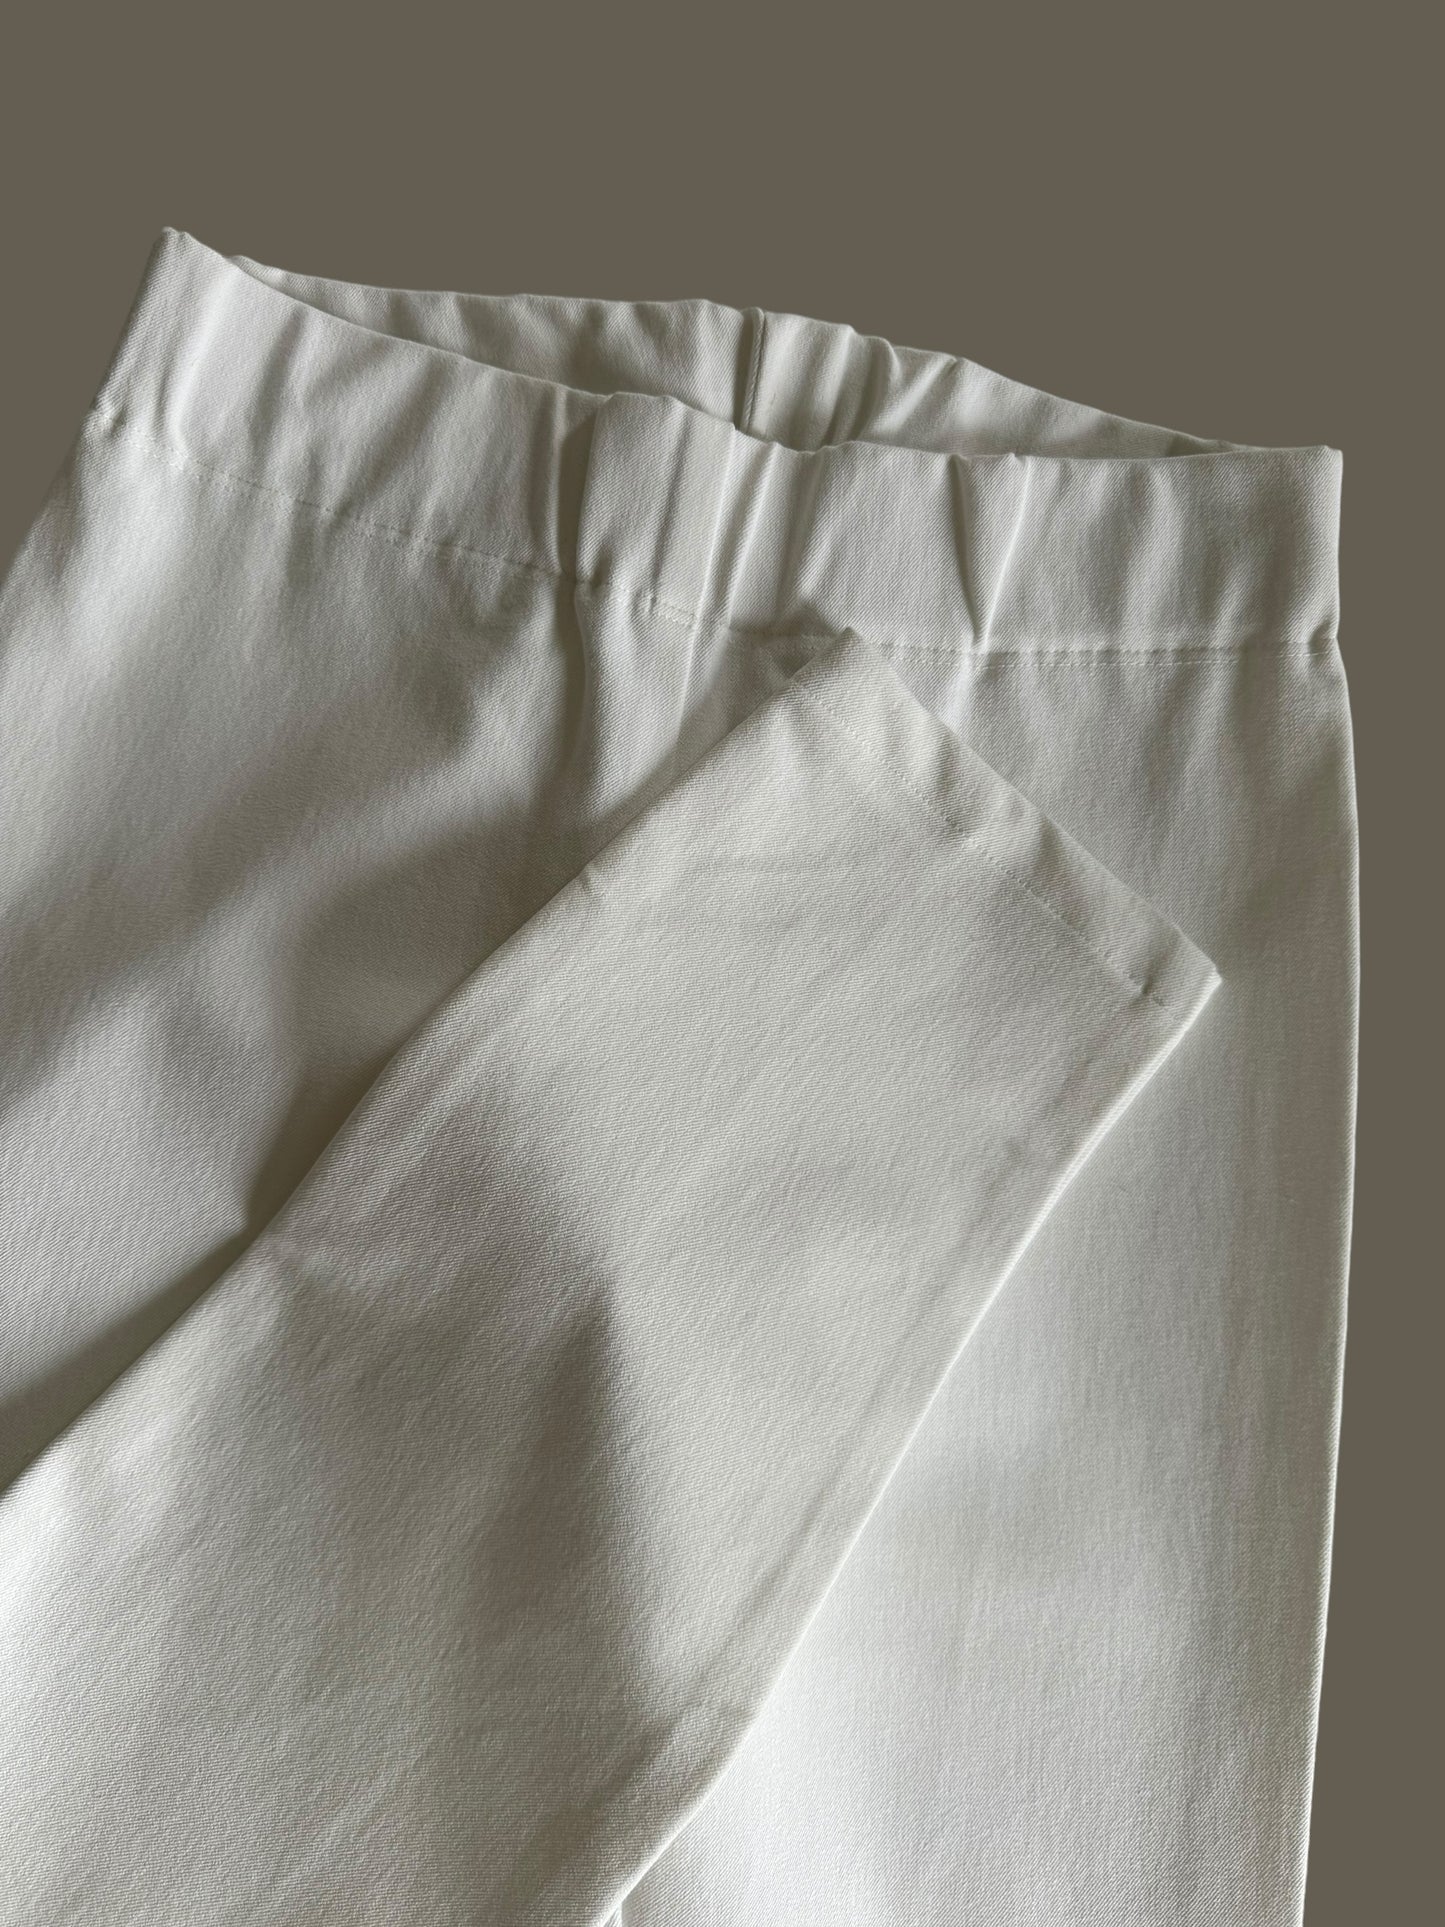 white jean leggings size small